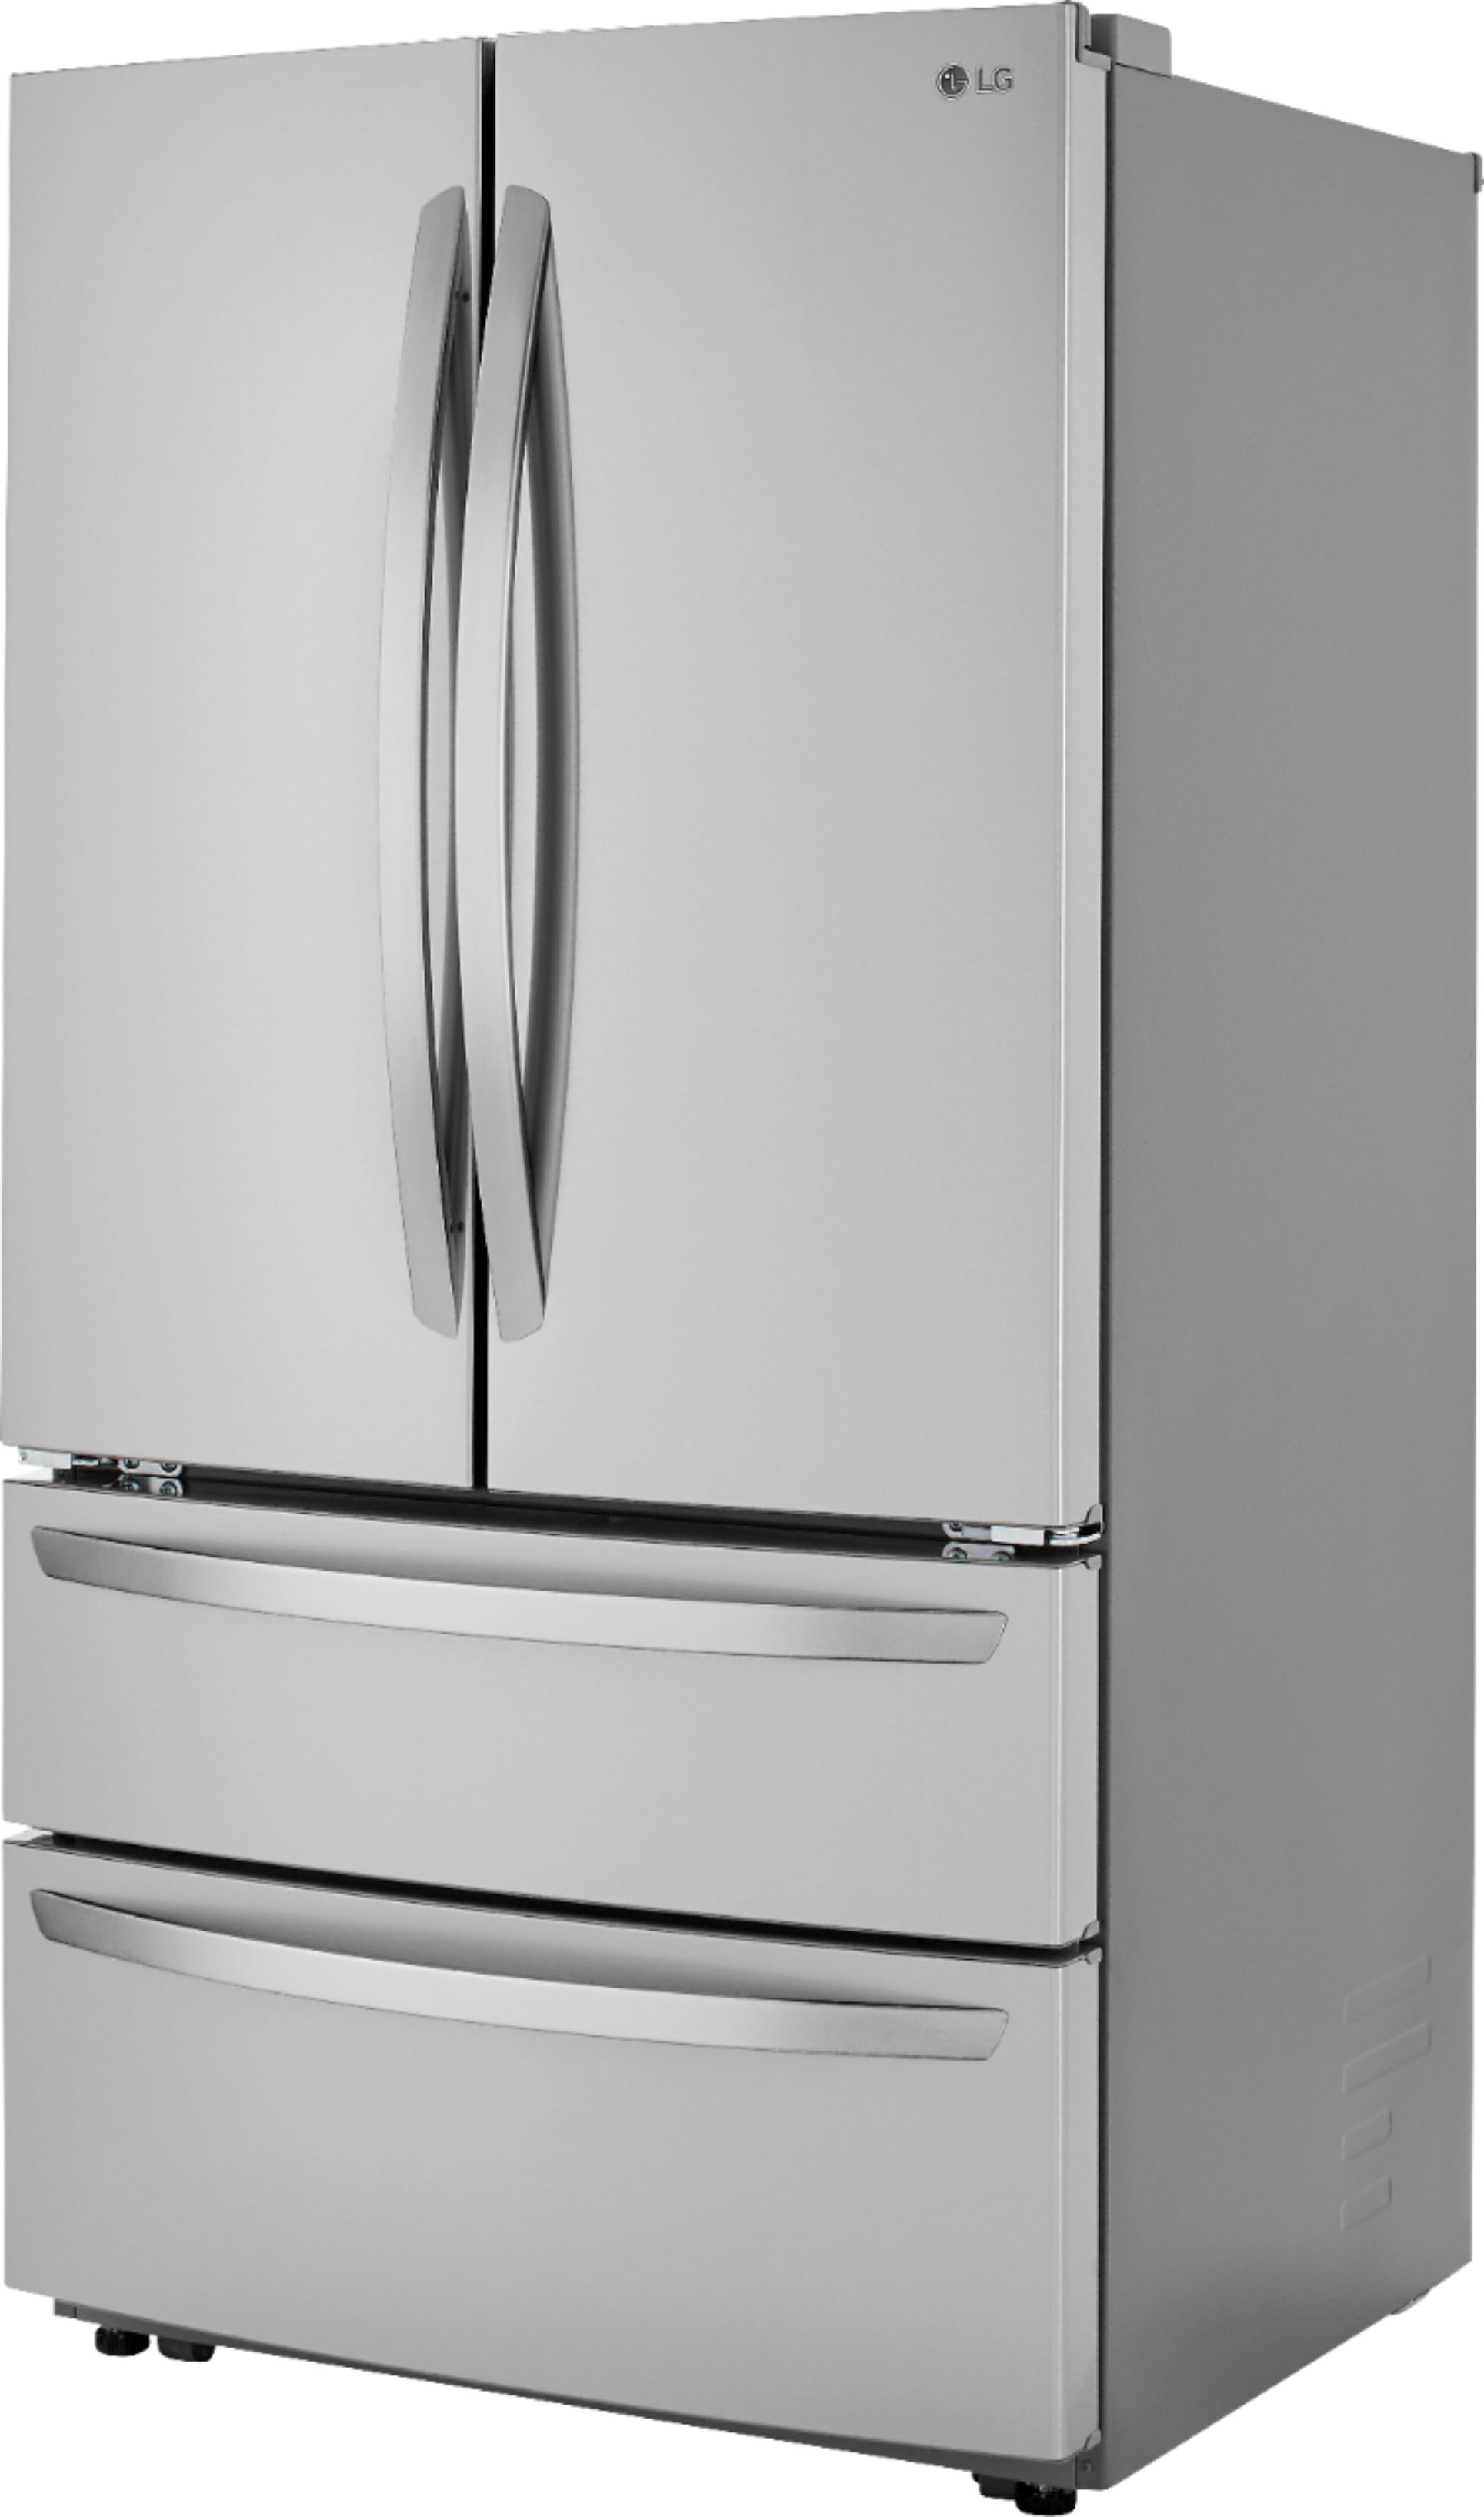 Left View: LG - 22.7 Cu. Ft. 4-Door French Door Counter-Depth Refrigerator with Double Freezer and Internal Water Dispenser - Stainless steel